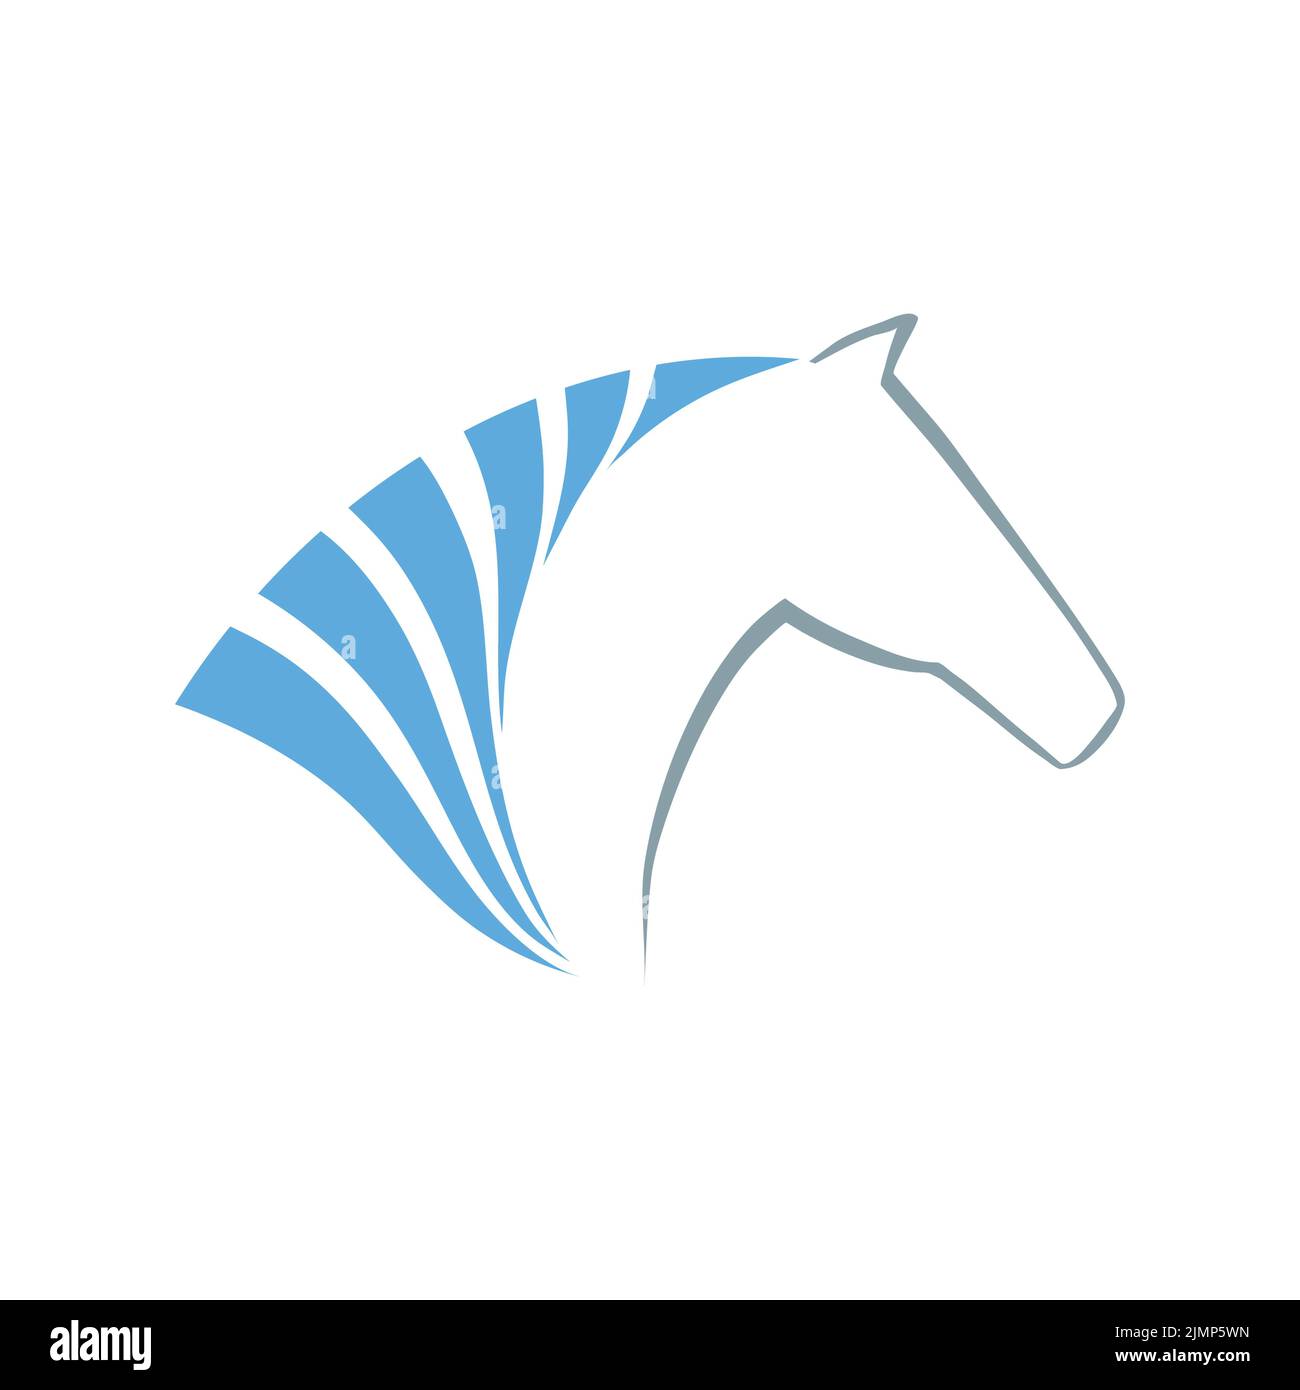 Horse symbol vector Stock Photo